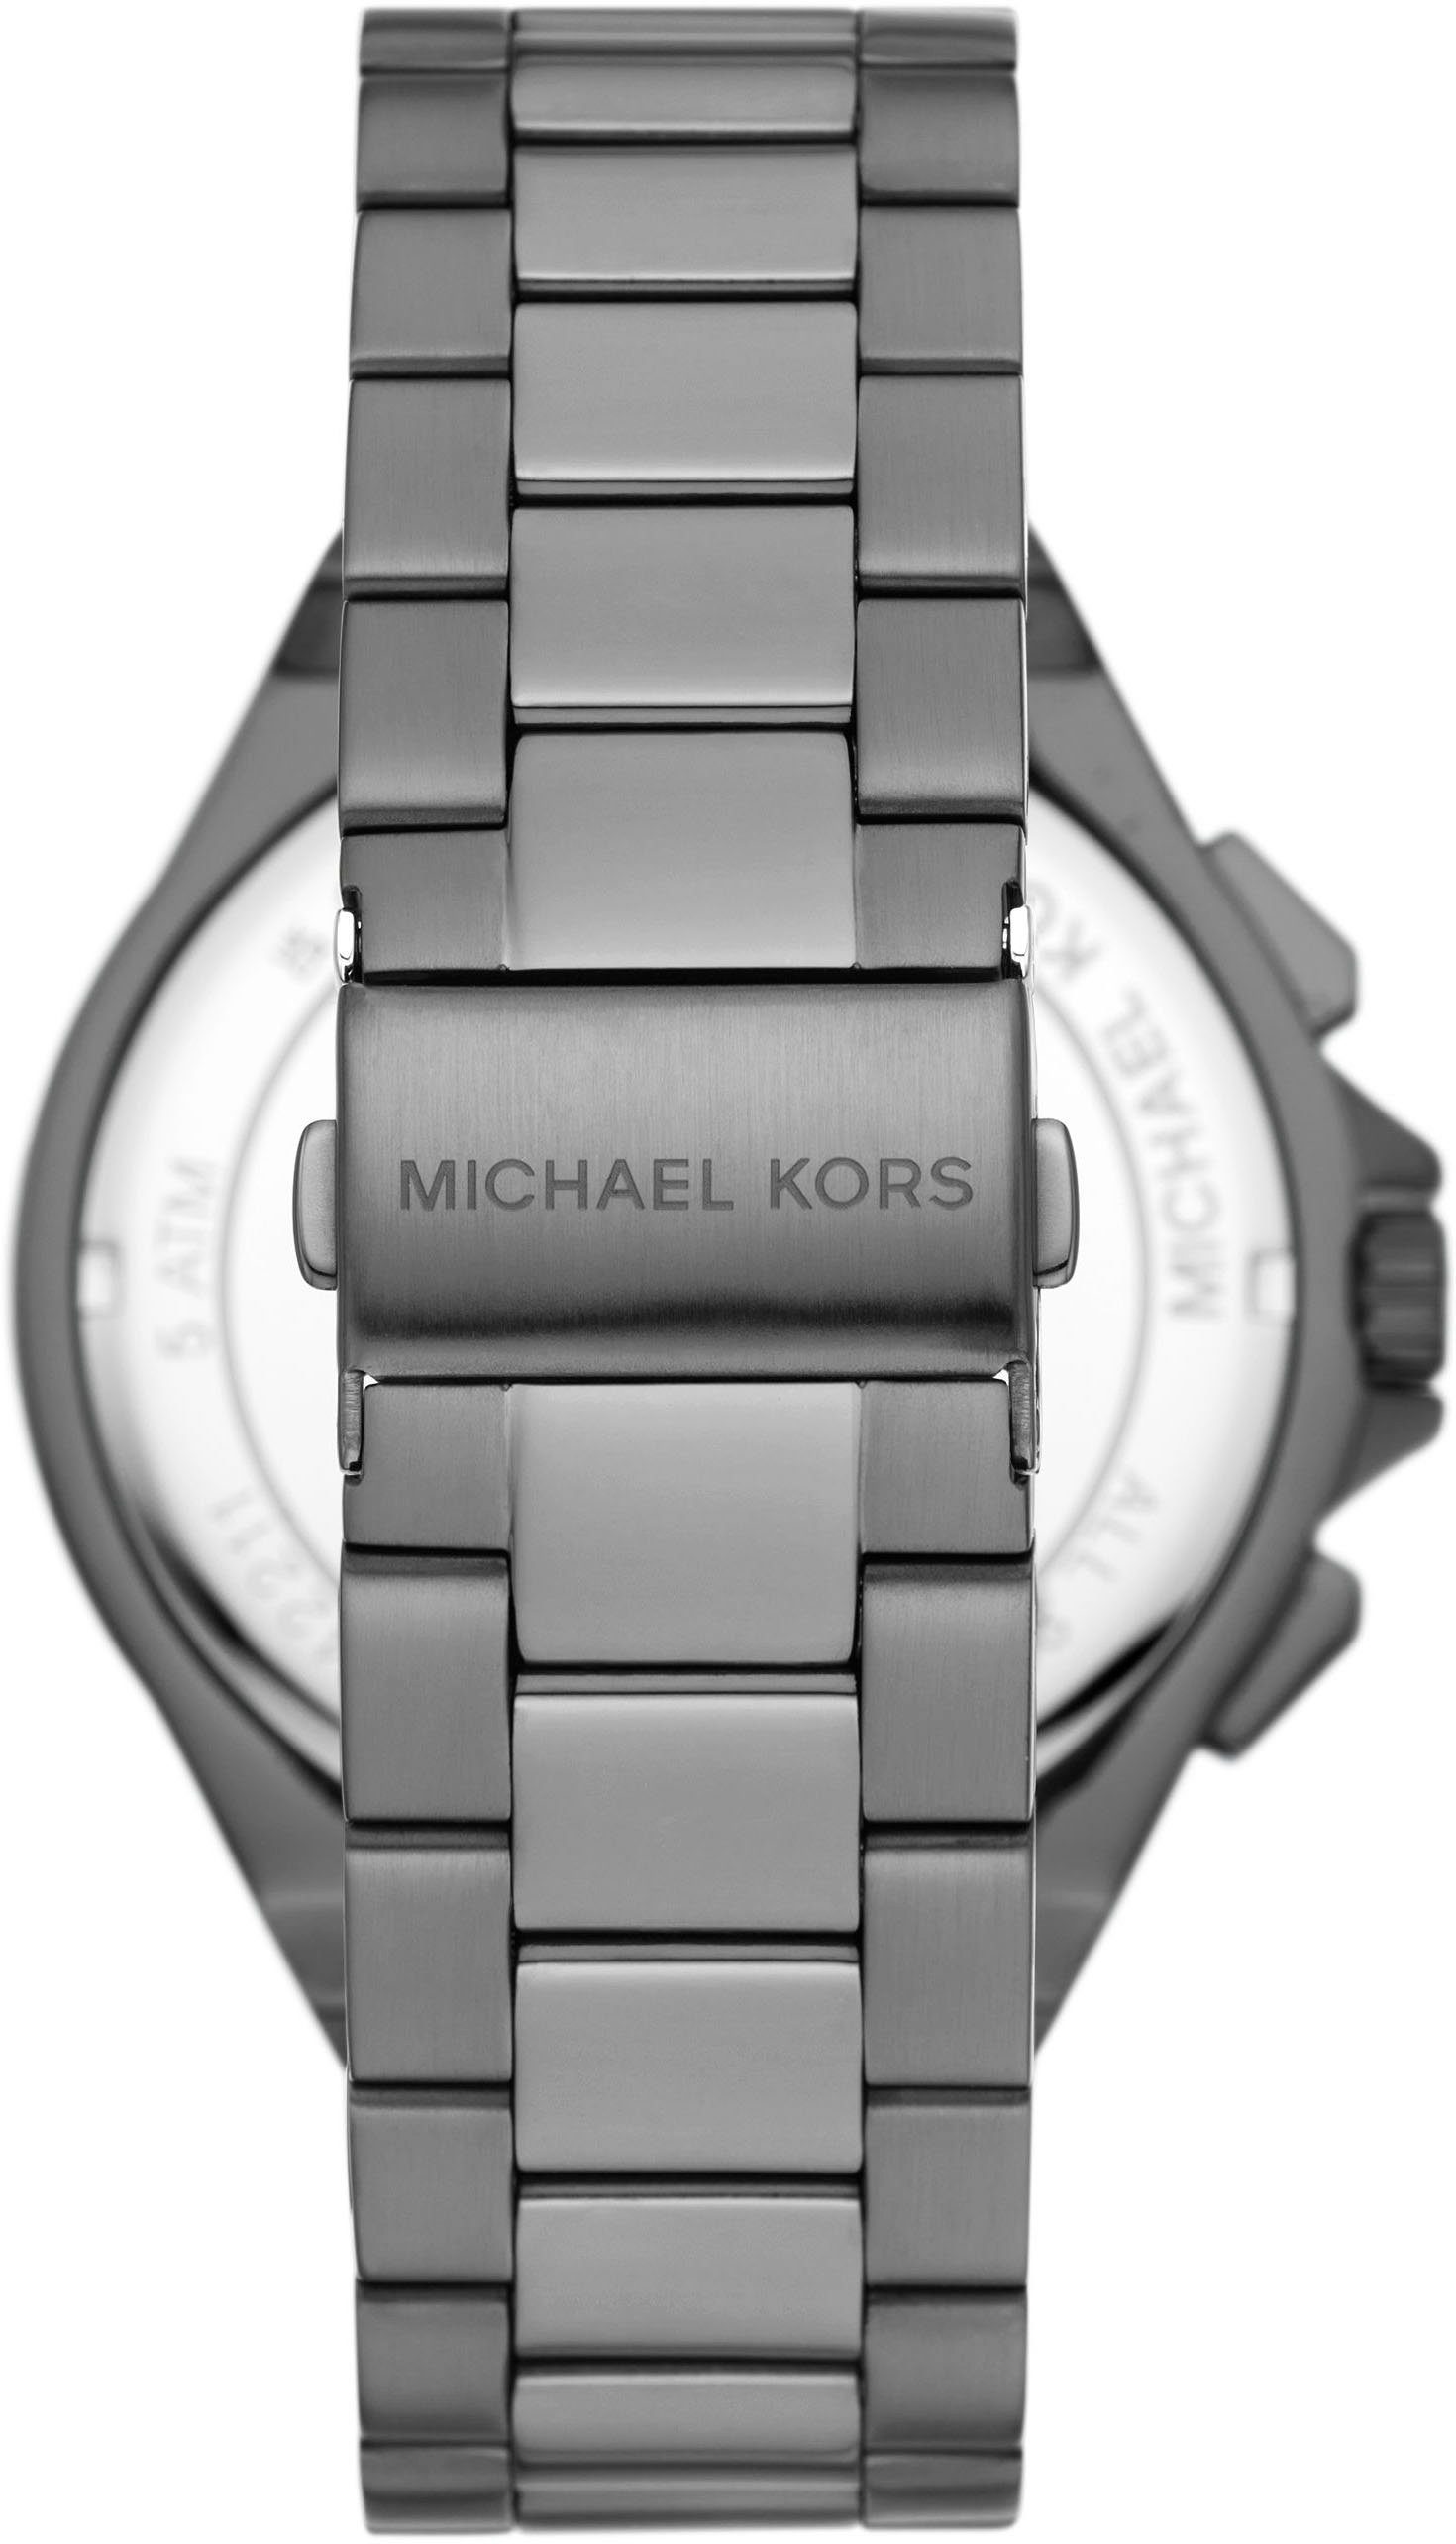 MK9102 MICHAEL KORS Chronograph LENNOX,